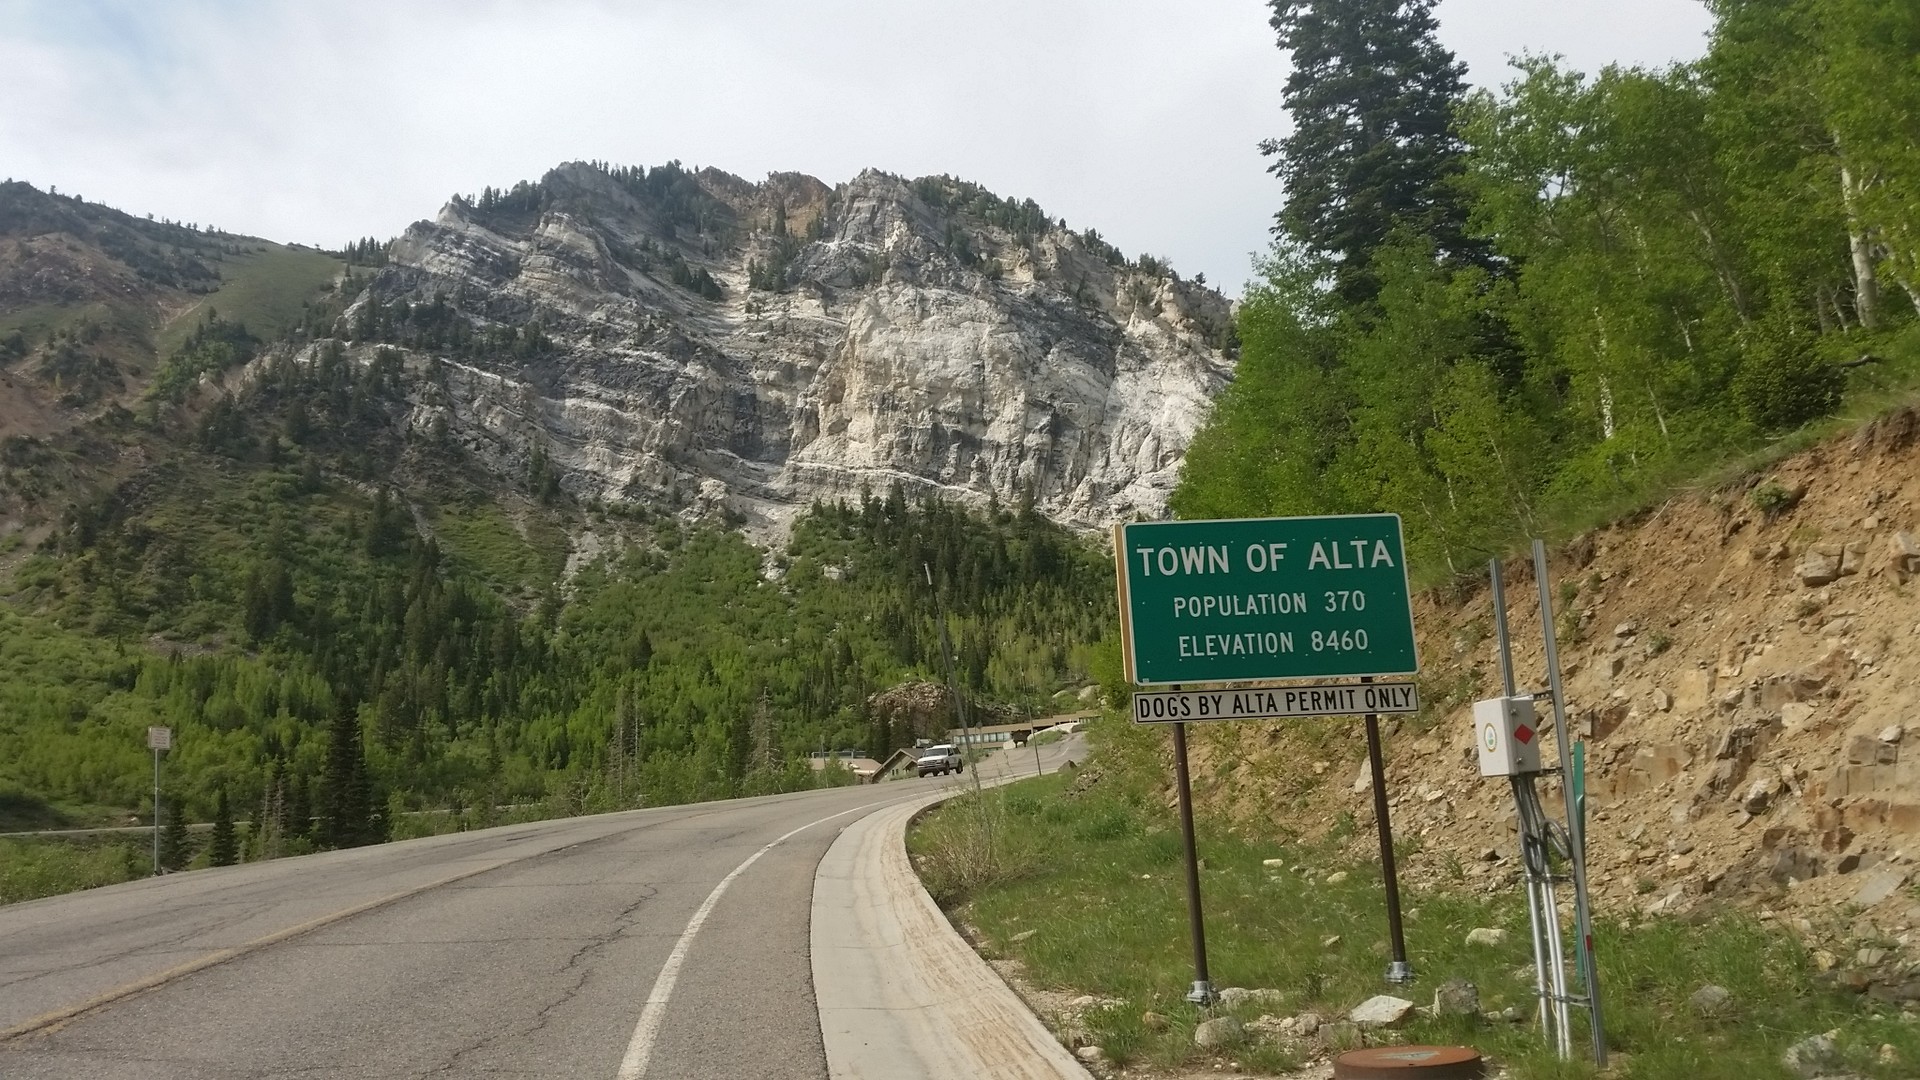 Town of Alta, Population 370, Elevation 8460 ft (= 2579 m).